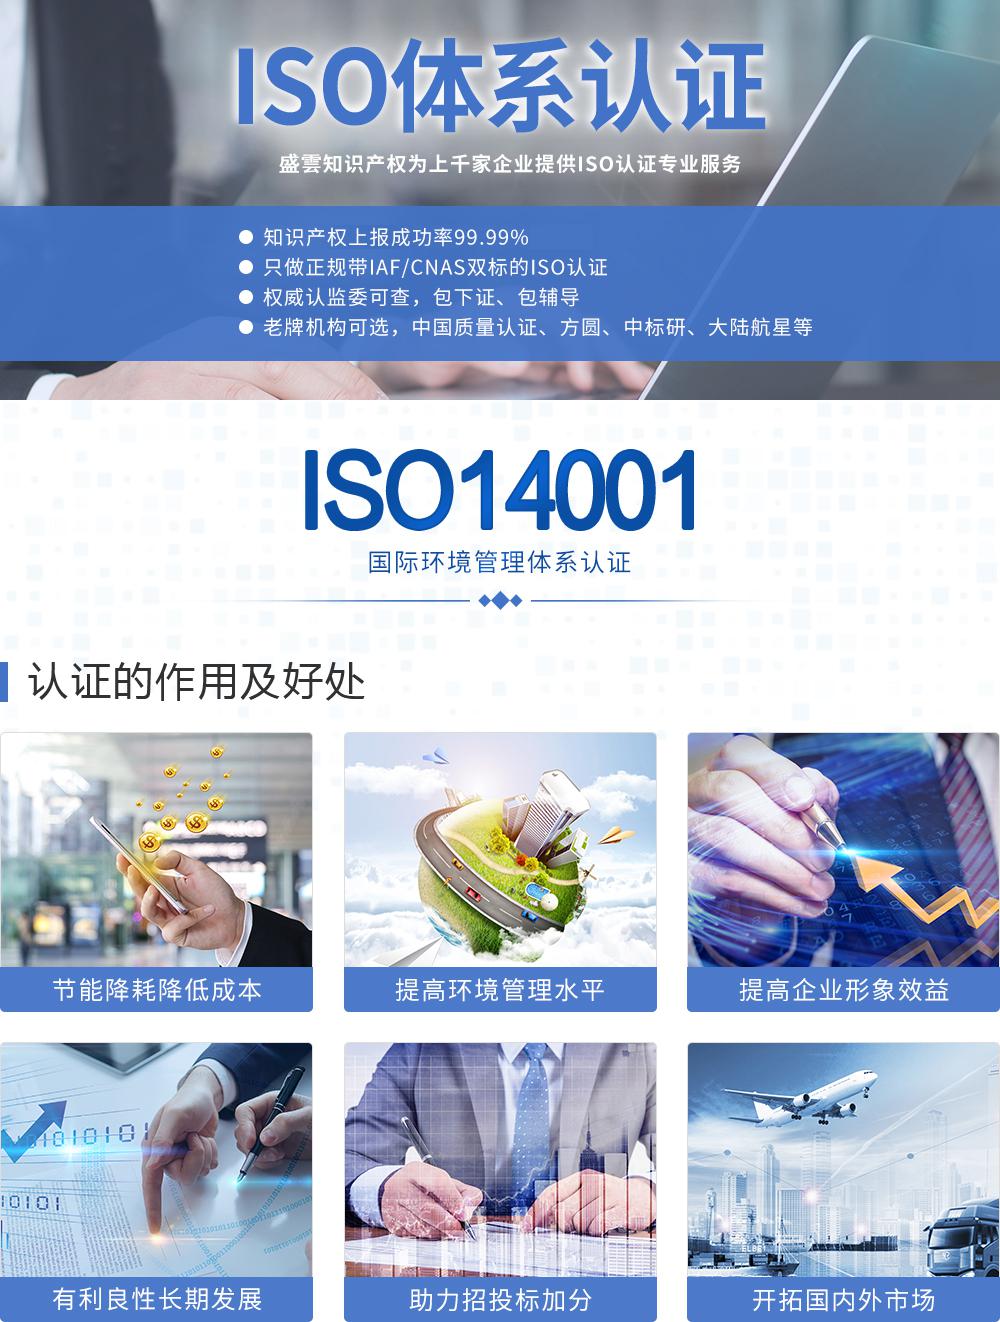 ISO14001环境管理体系保定盛雲知识产权代理有限公司